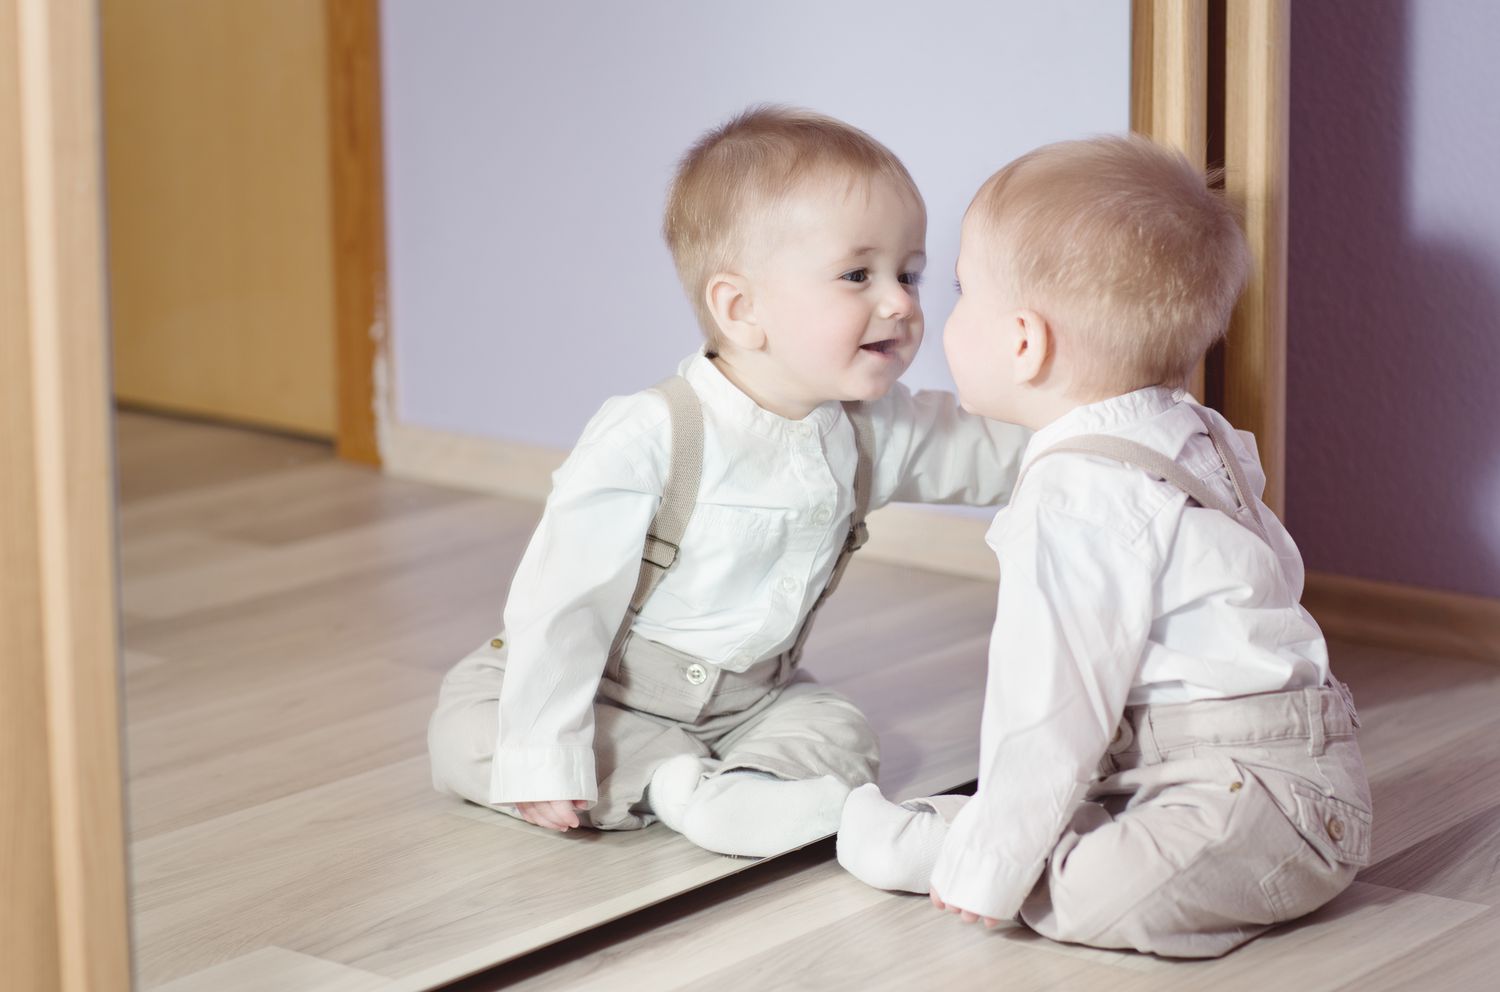 mirrors for baby development ninitest